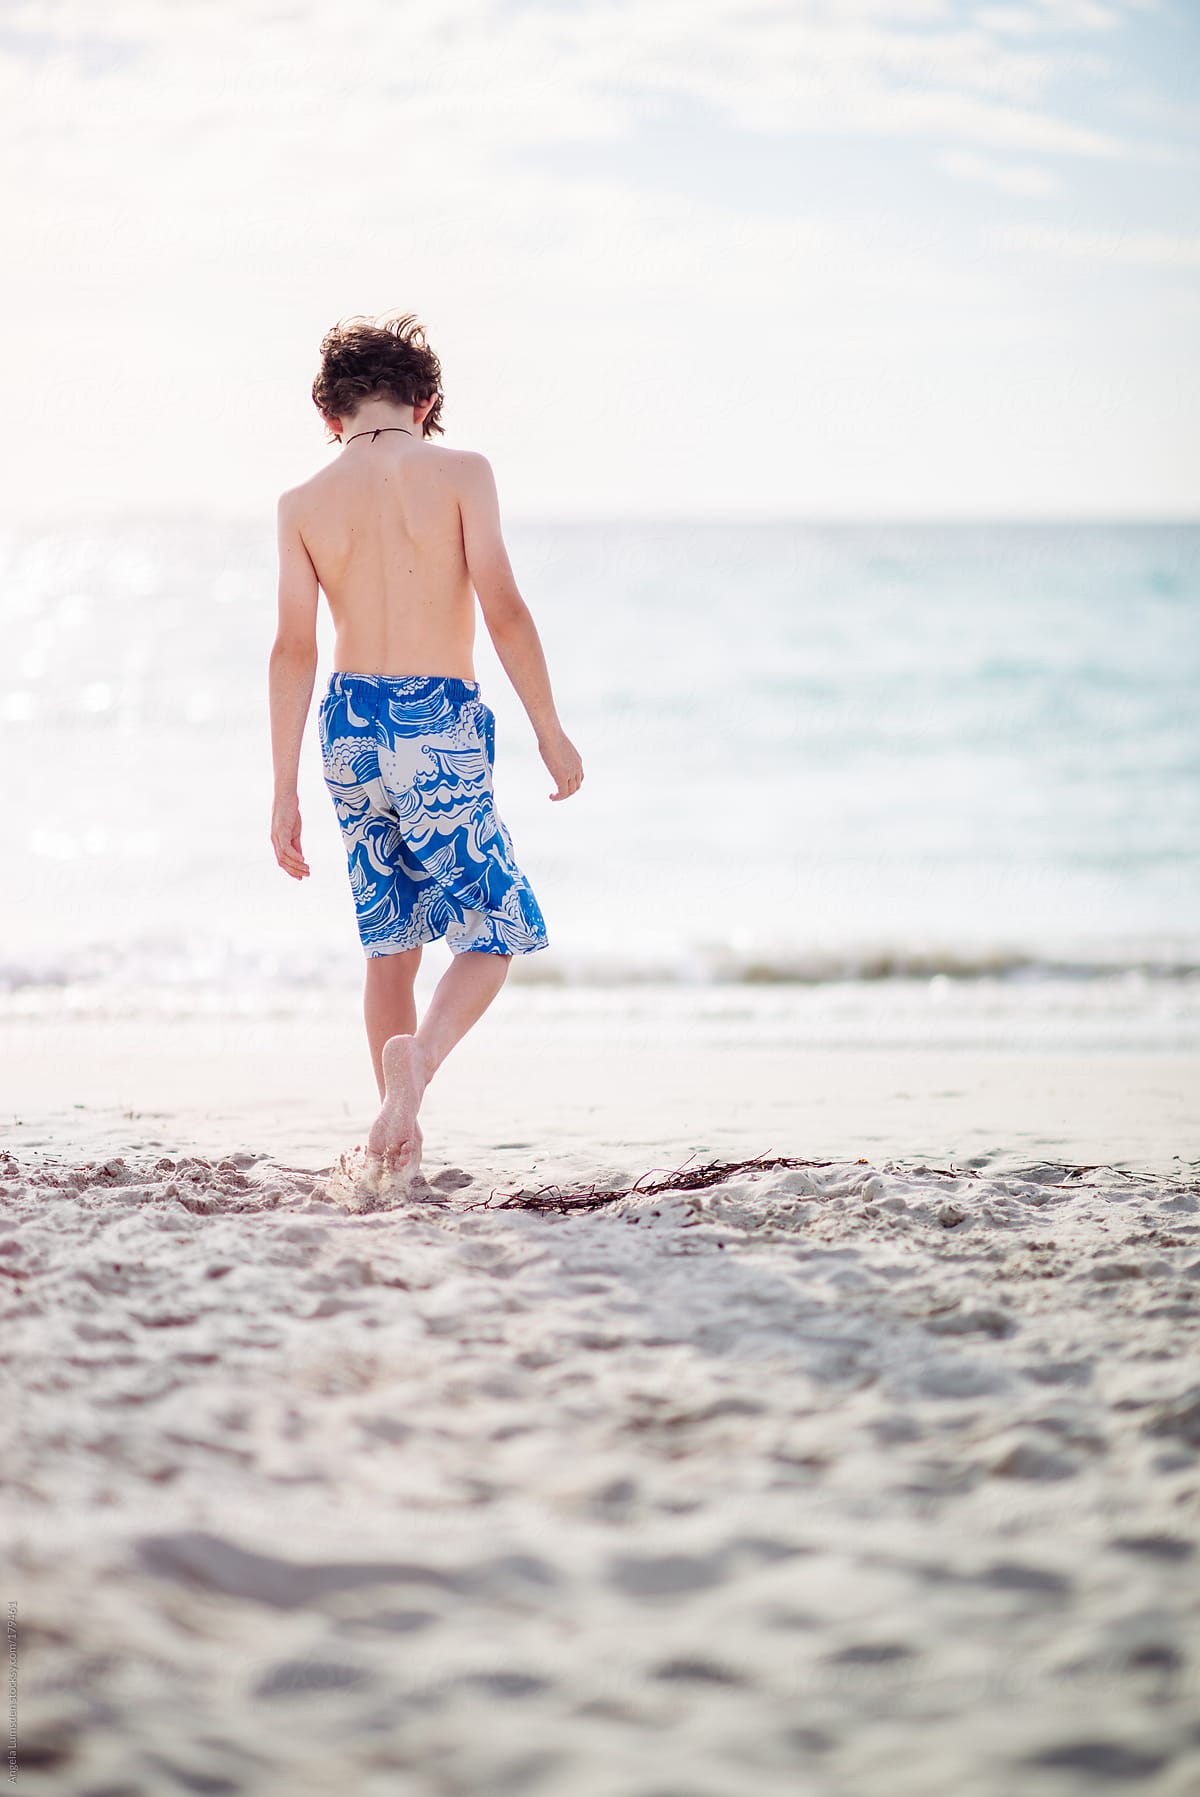 Boy in bathing suit walking towards the ocean